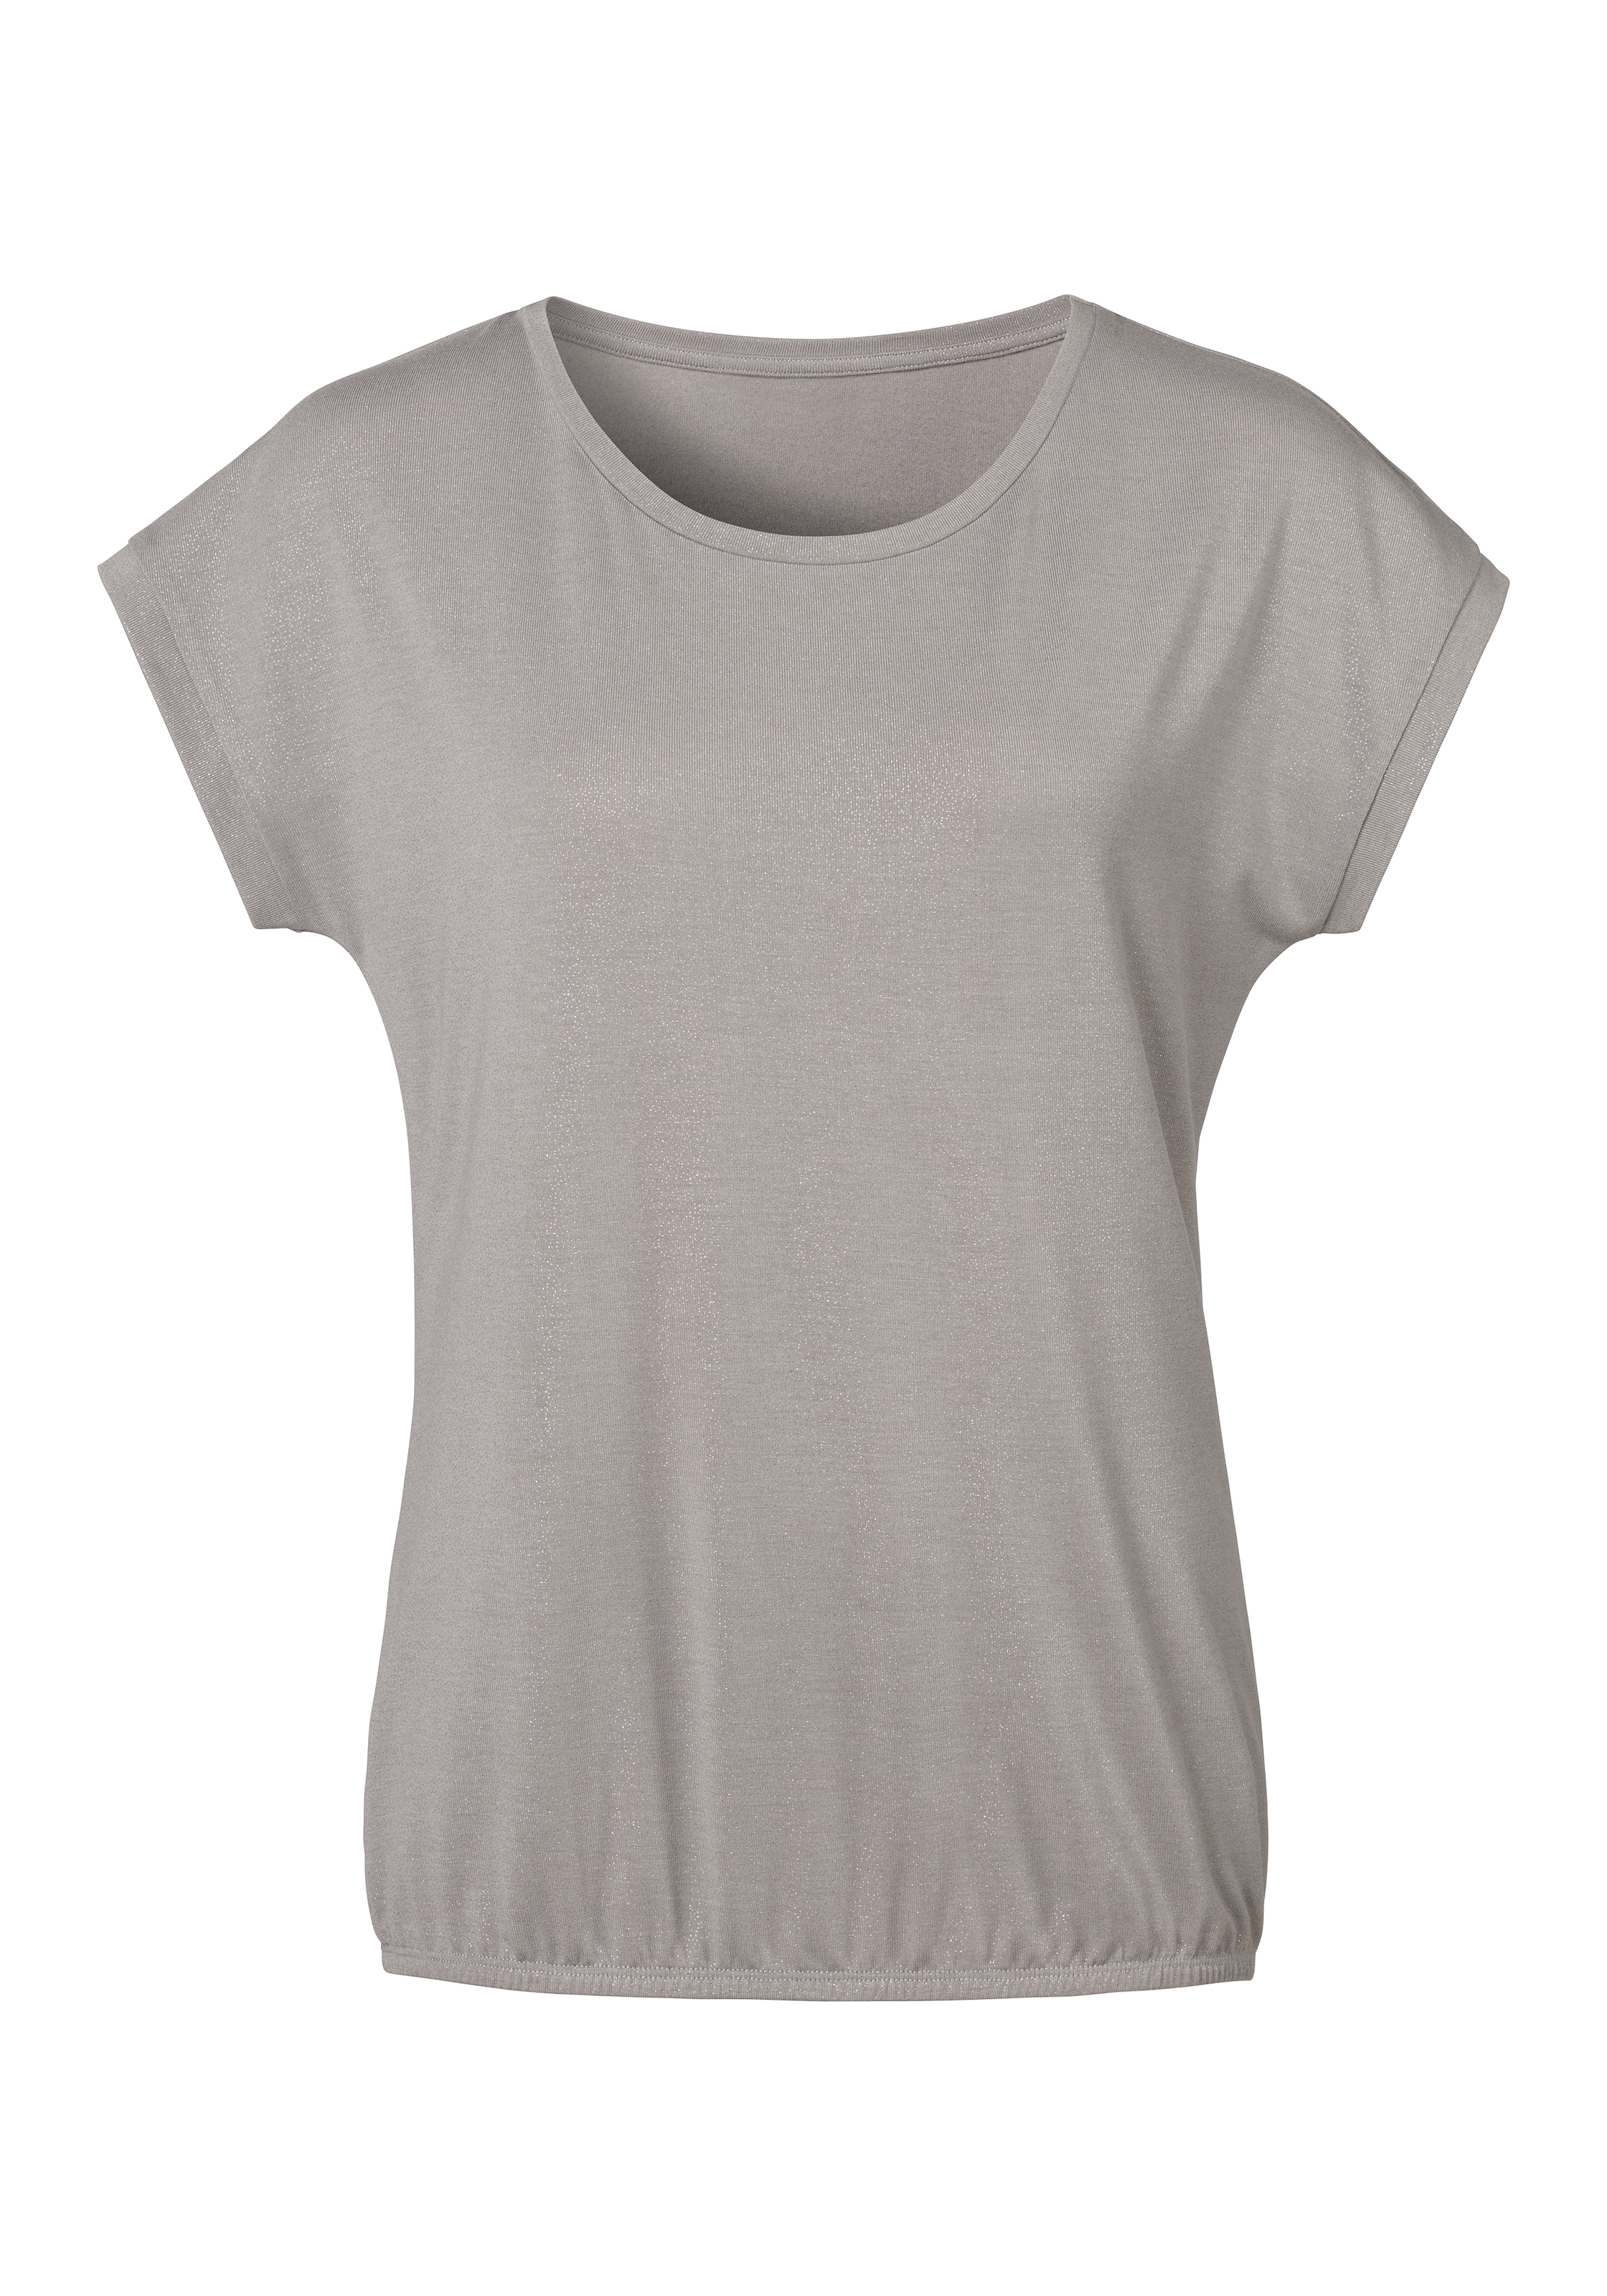 OTTO T-Shirt, Vivance mit silbrigem Glitzerdruck, Shop im edler Online Look Kurzarmshirt,